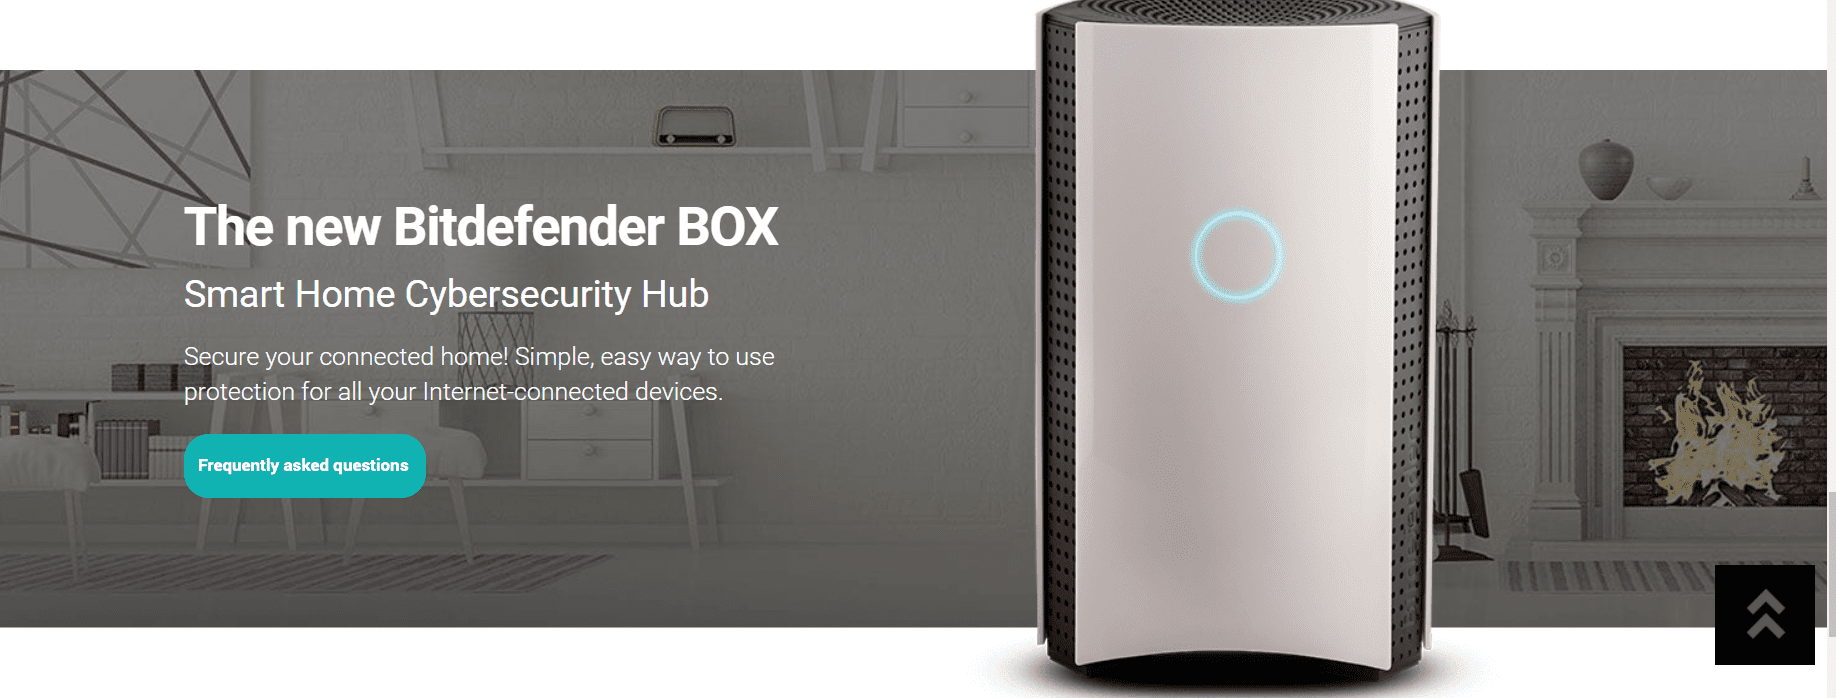 Bitdefender BOX IoT Security Solution